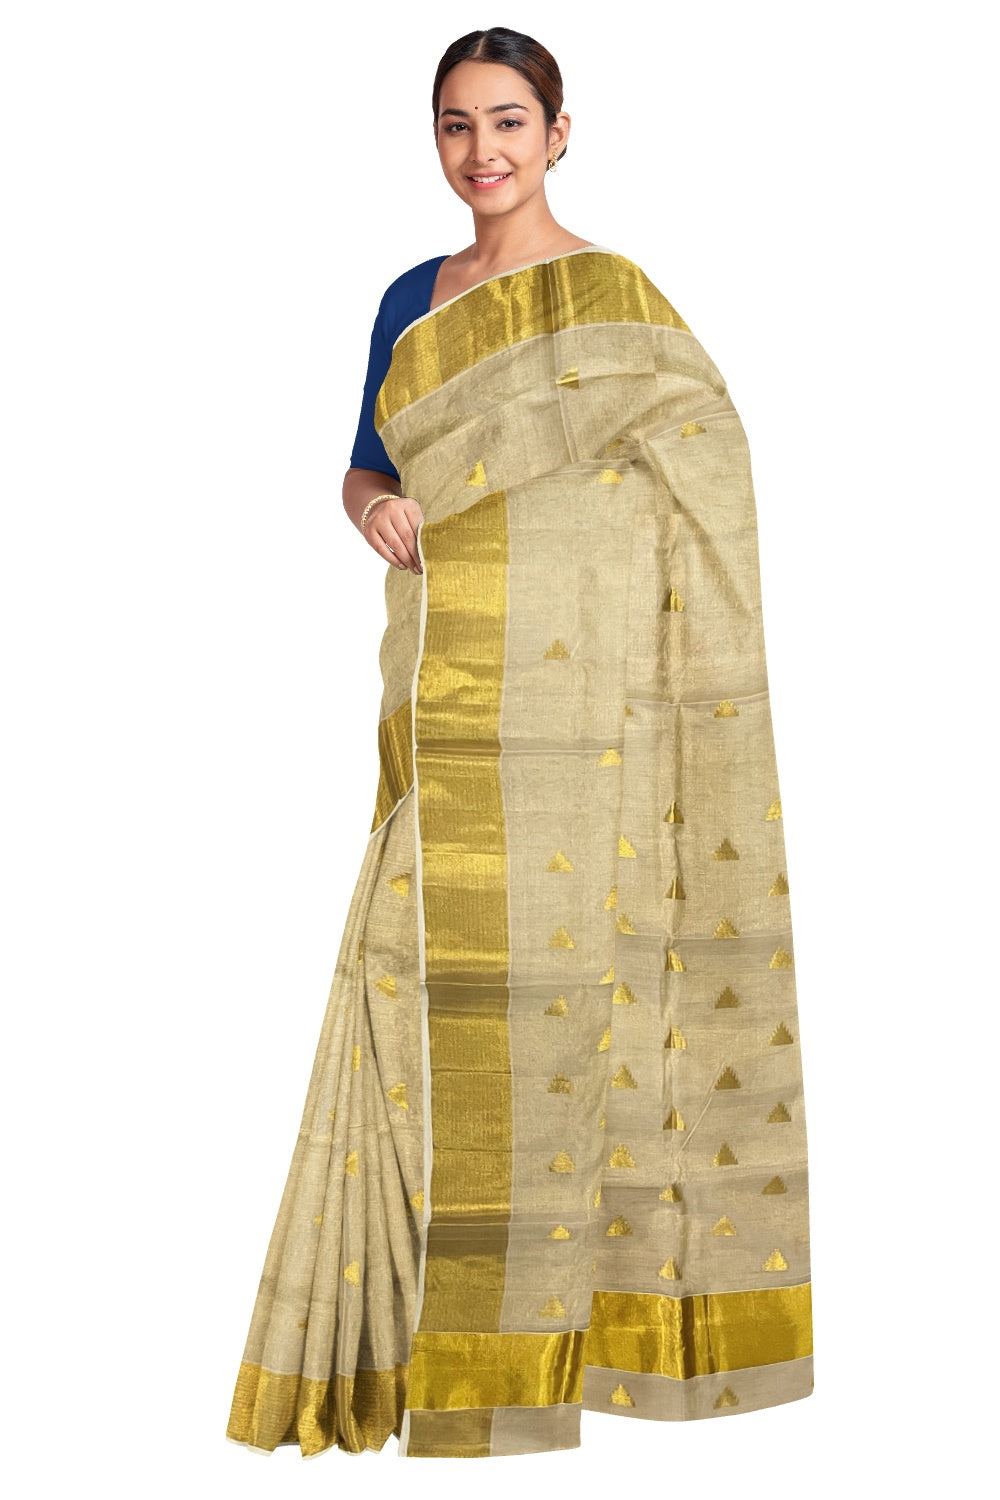 Southloom Premium Handloom Tissue Saree with Golden Temple Motifs